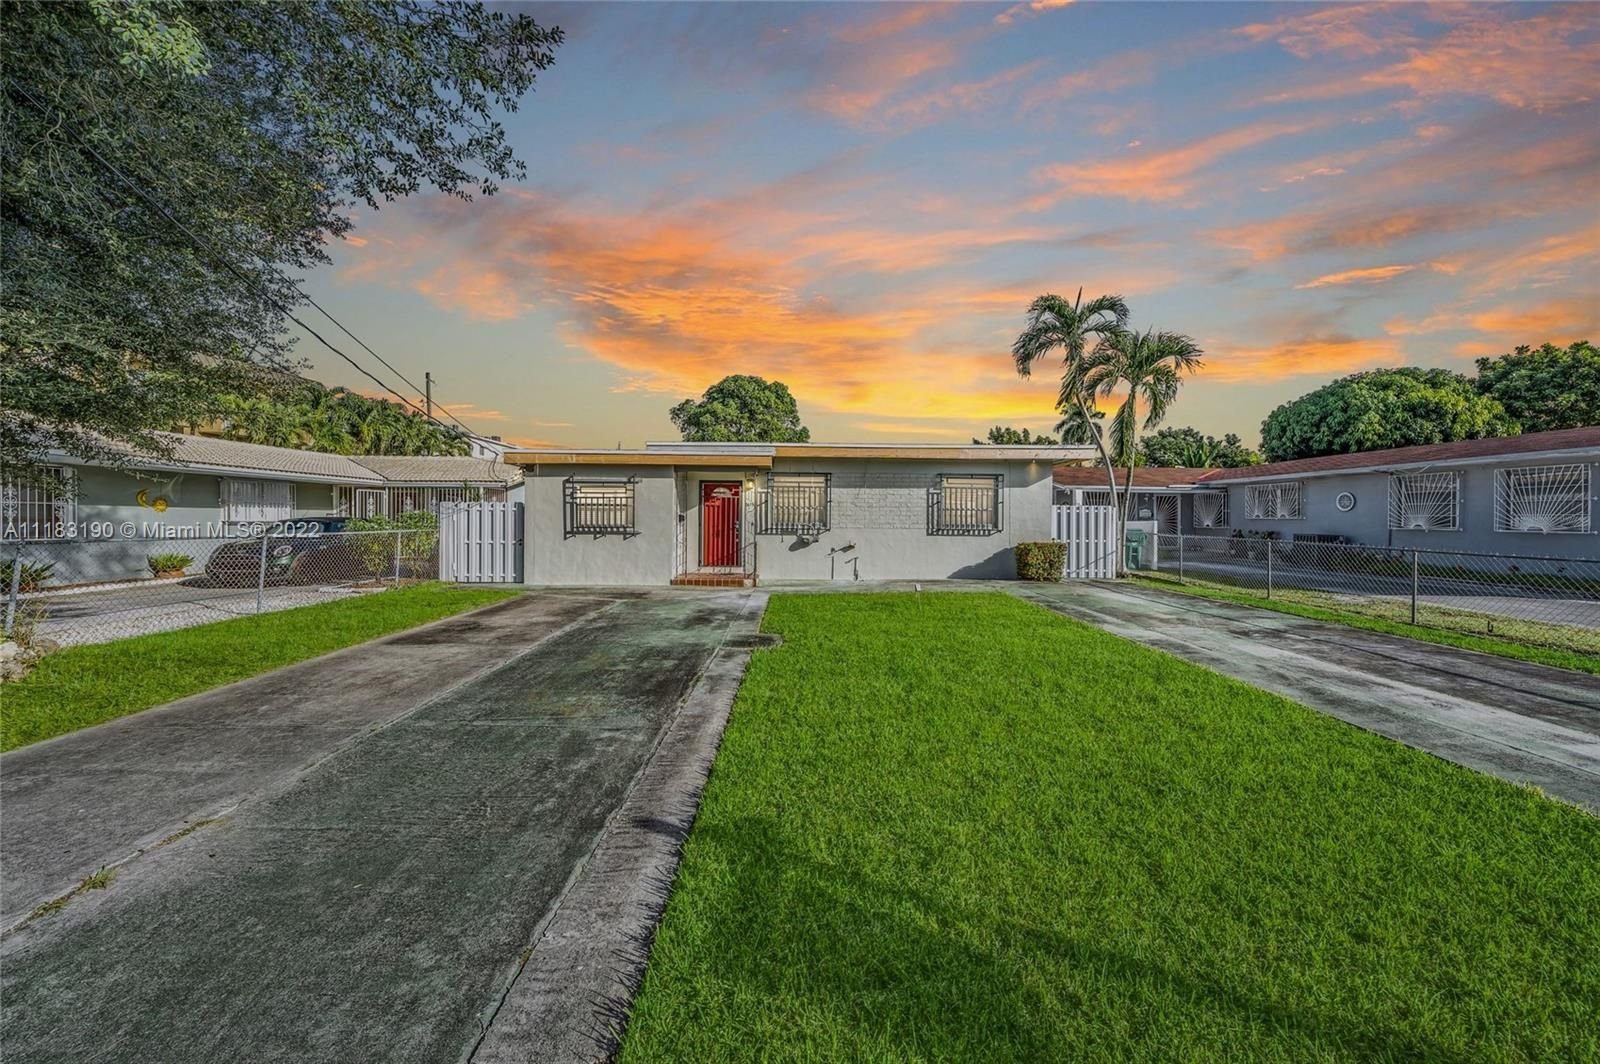 Real estate property located at 3675 4th St, Miami-Dade County, Miami, FL